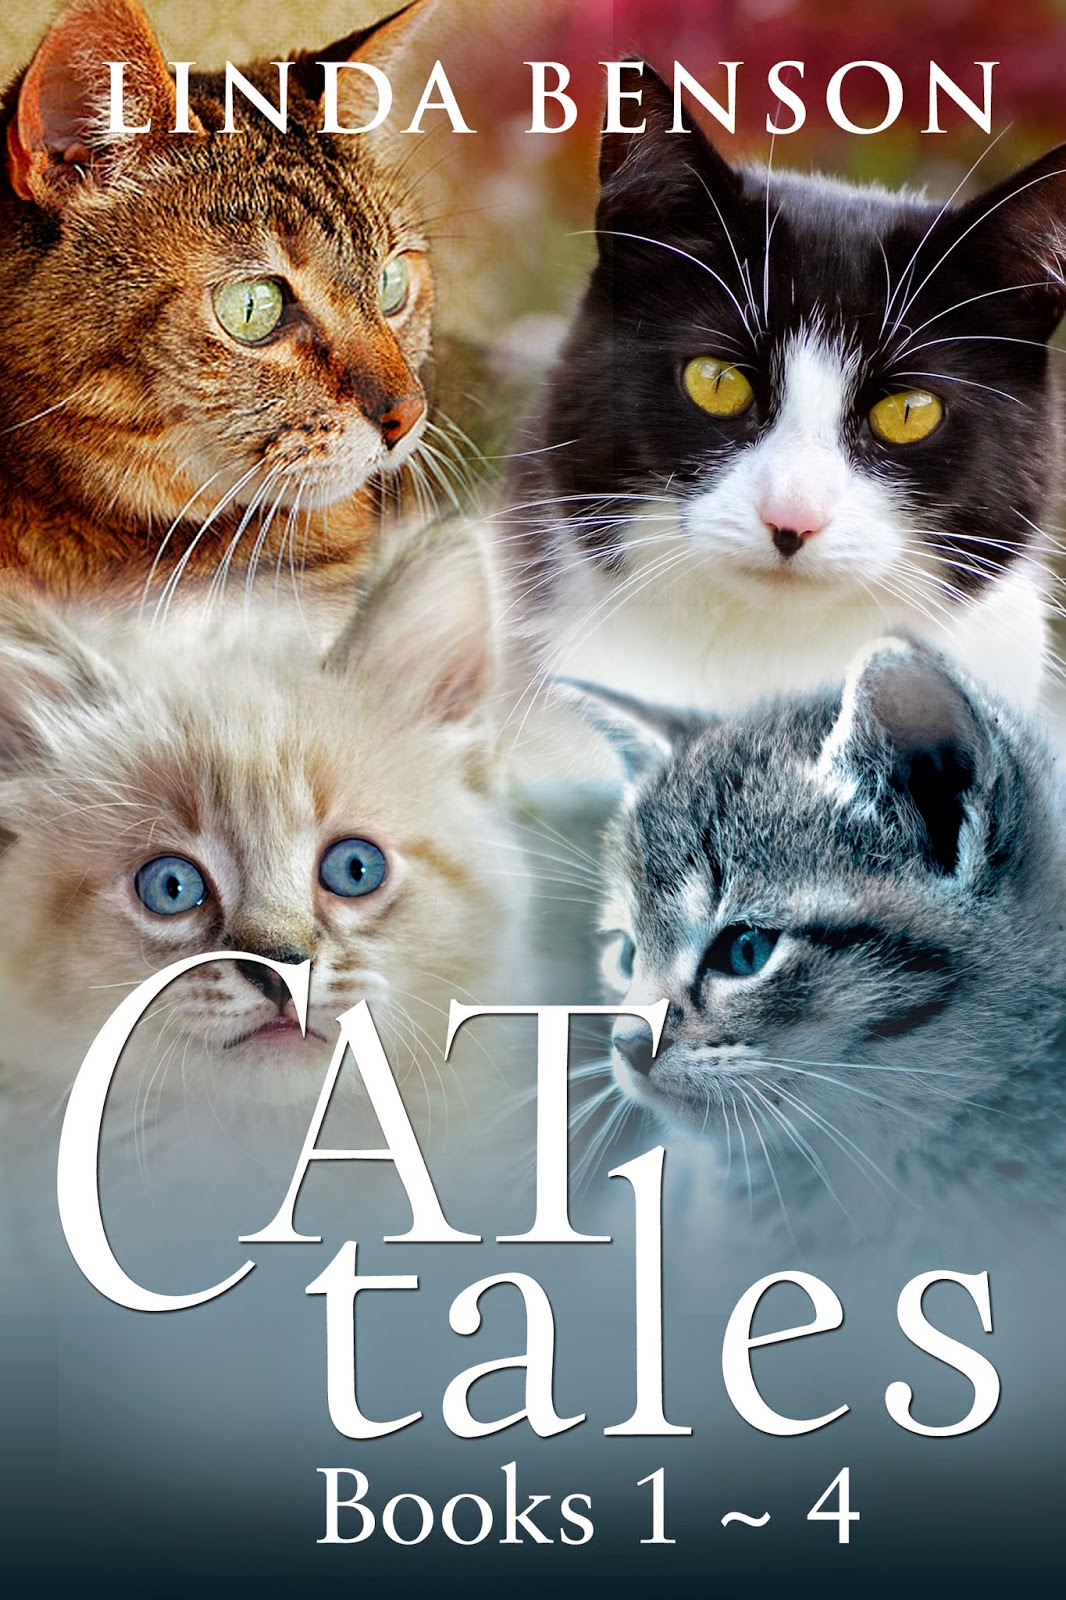 http://www.amazon.com/Cat-Tales-Books-Linda-Benson-ebook/dp/B00P5KMD28